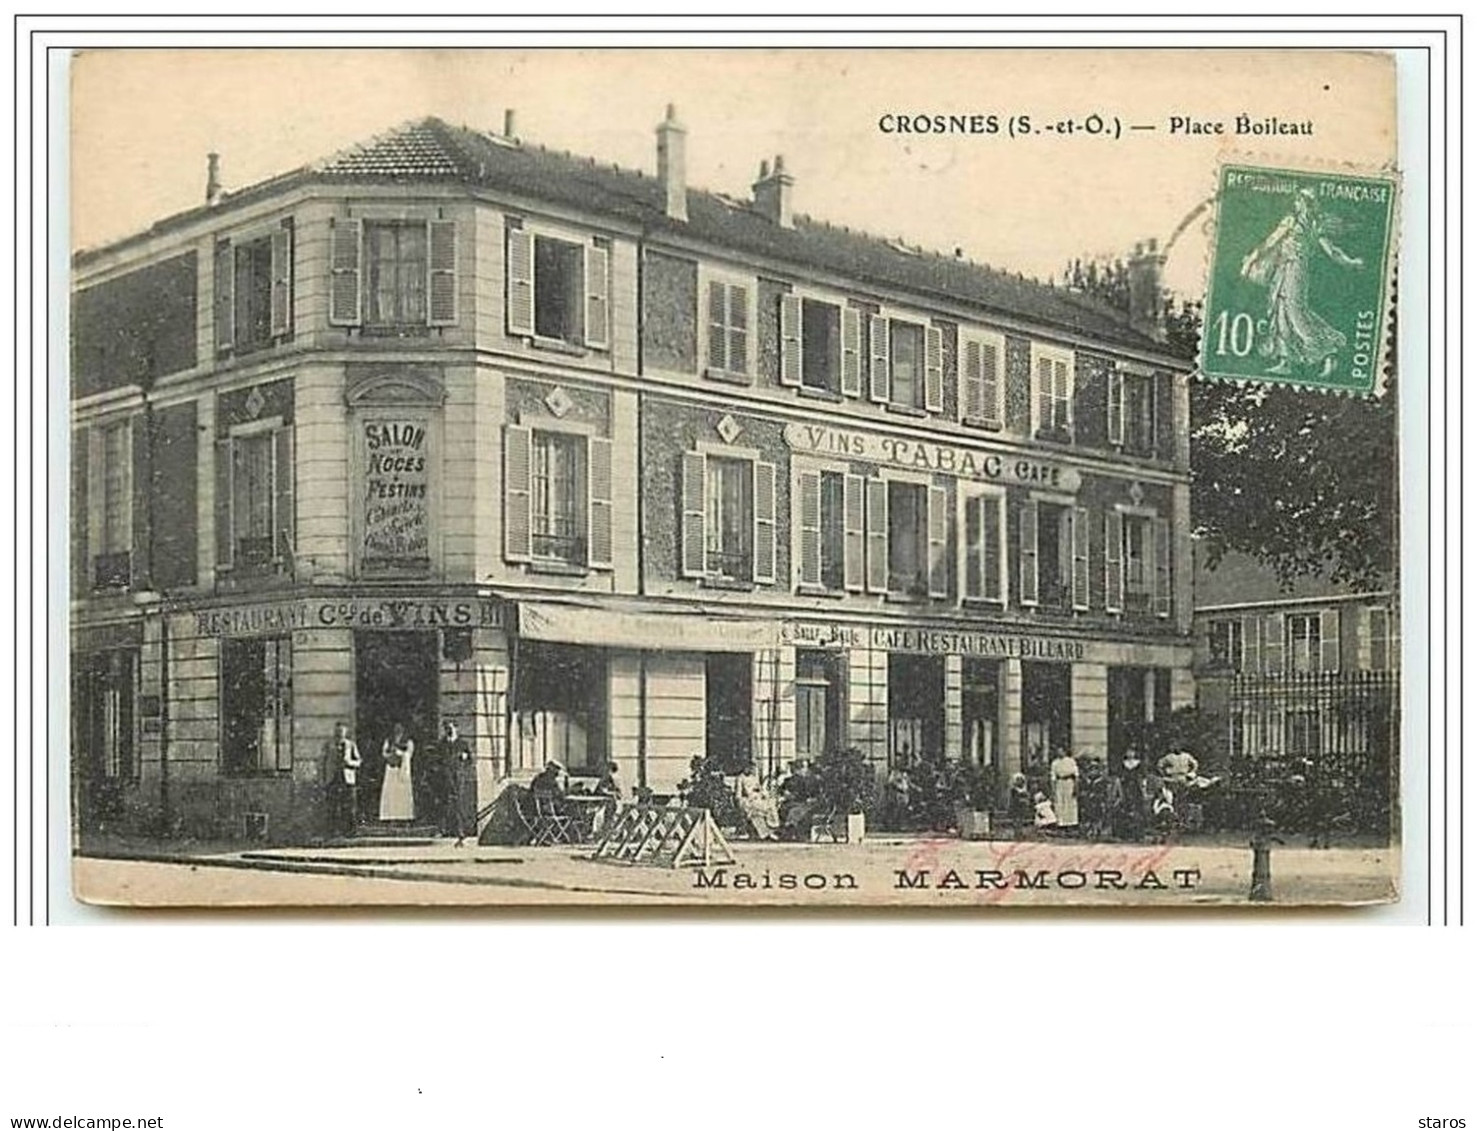 CROSNES Place Boileau Maison Marmorat - Crosnes (Crosne)